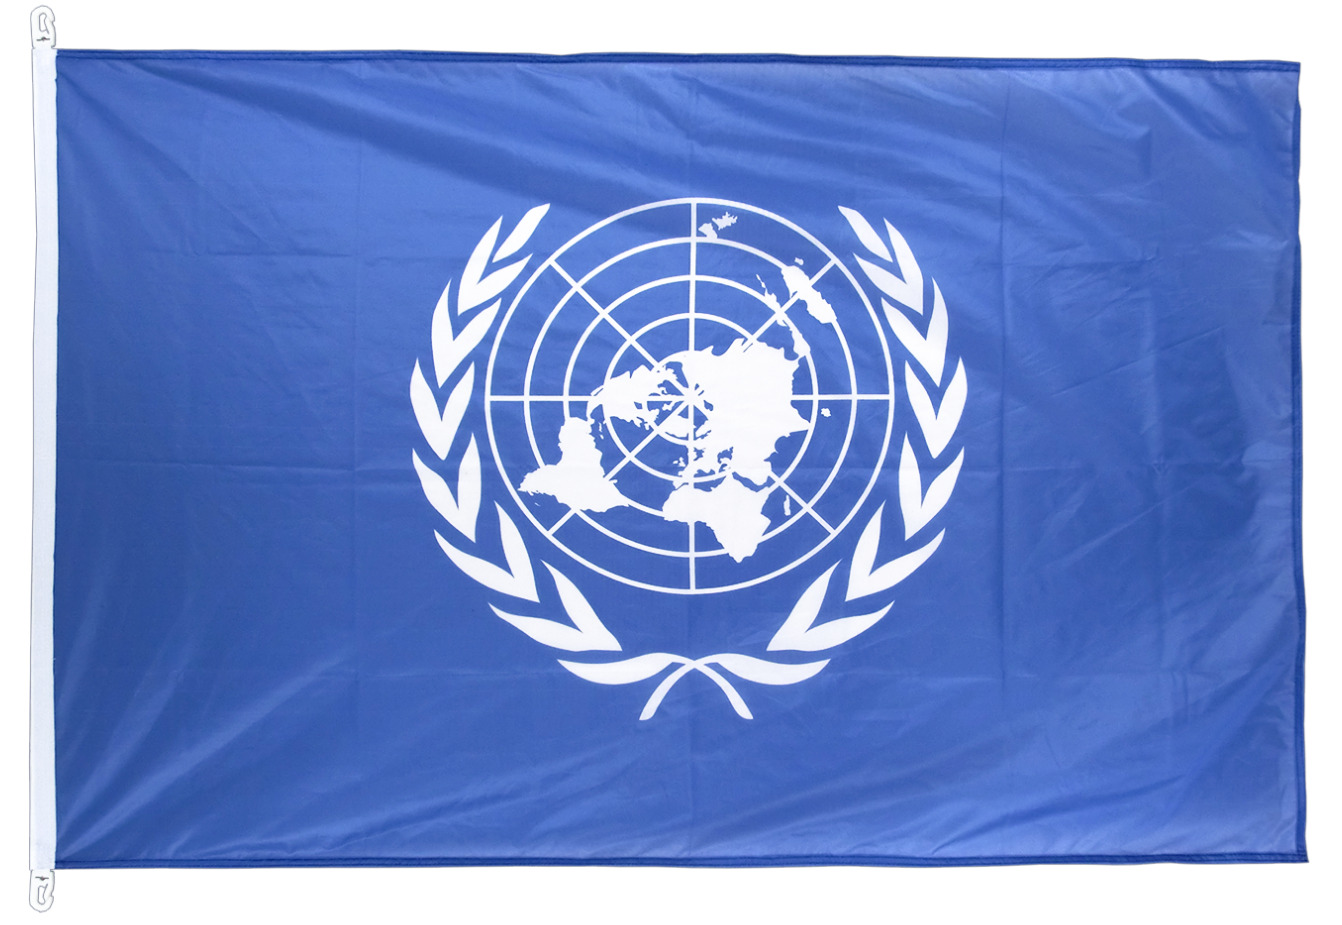 Кодекс оон. Флаг организации Объединенных наций. Международные организации ООН. Флаг организации ООН. Карта на флаге ООН.